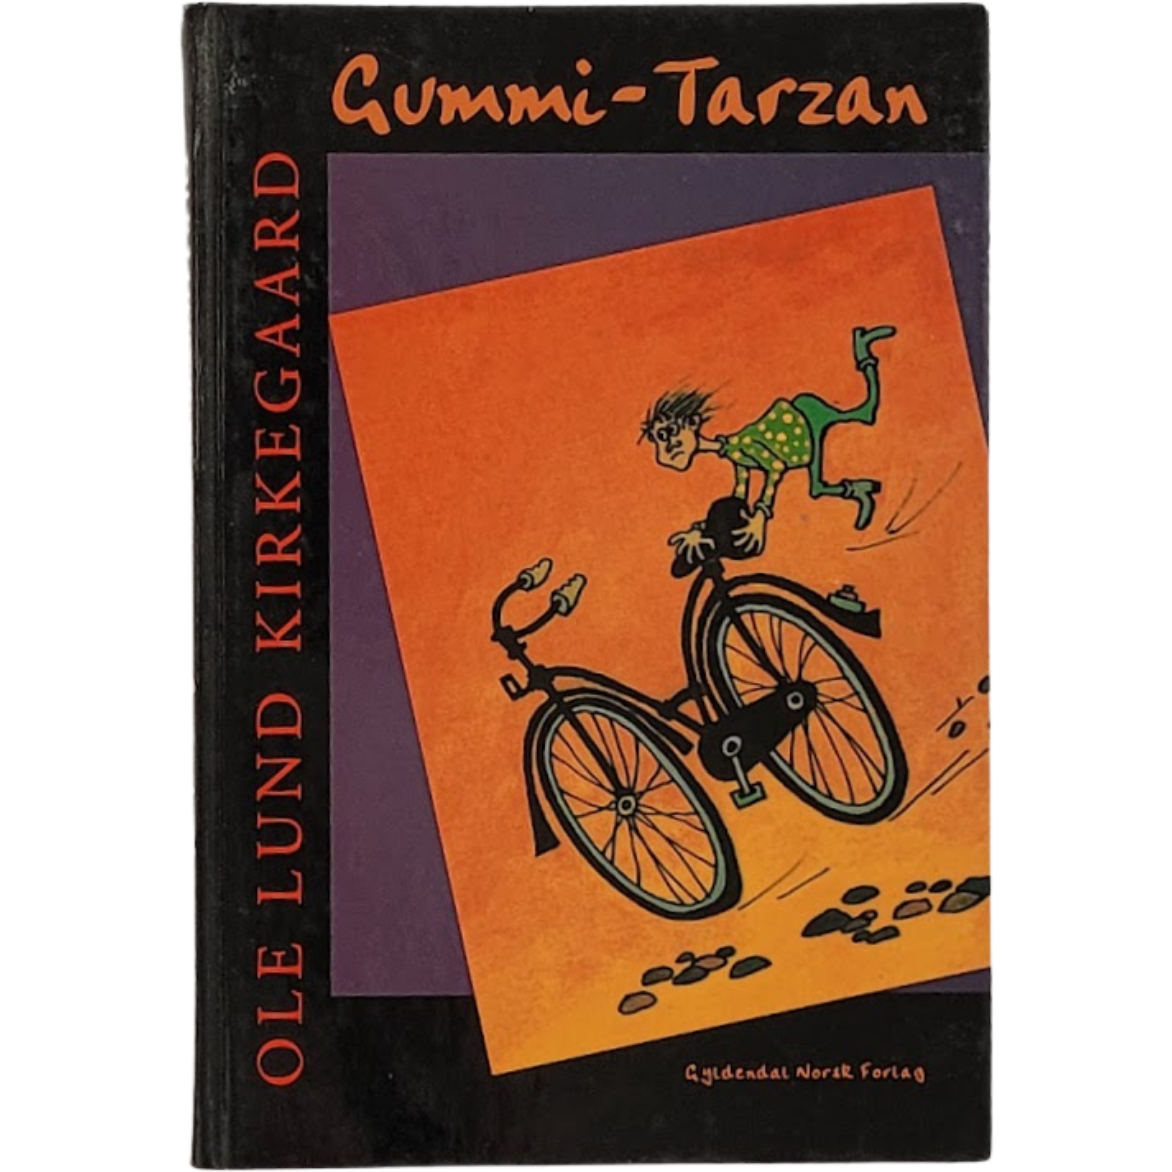 Gummi-Tarzan, brukte bøker av Ole Lund Kirkegaard